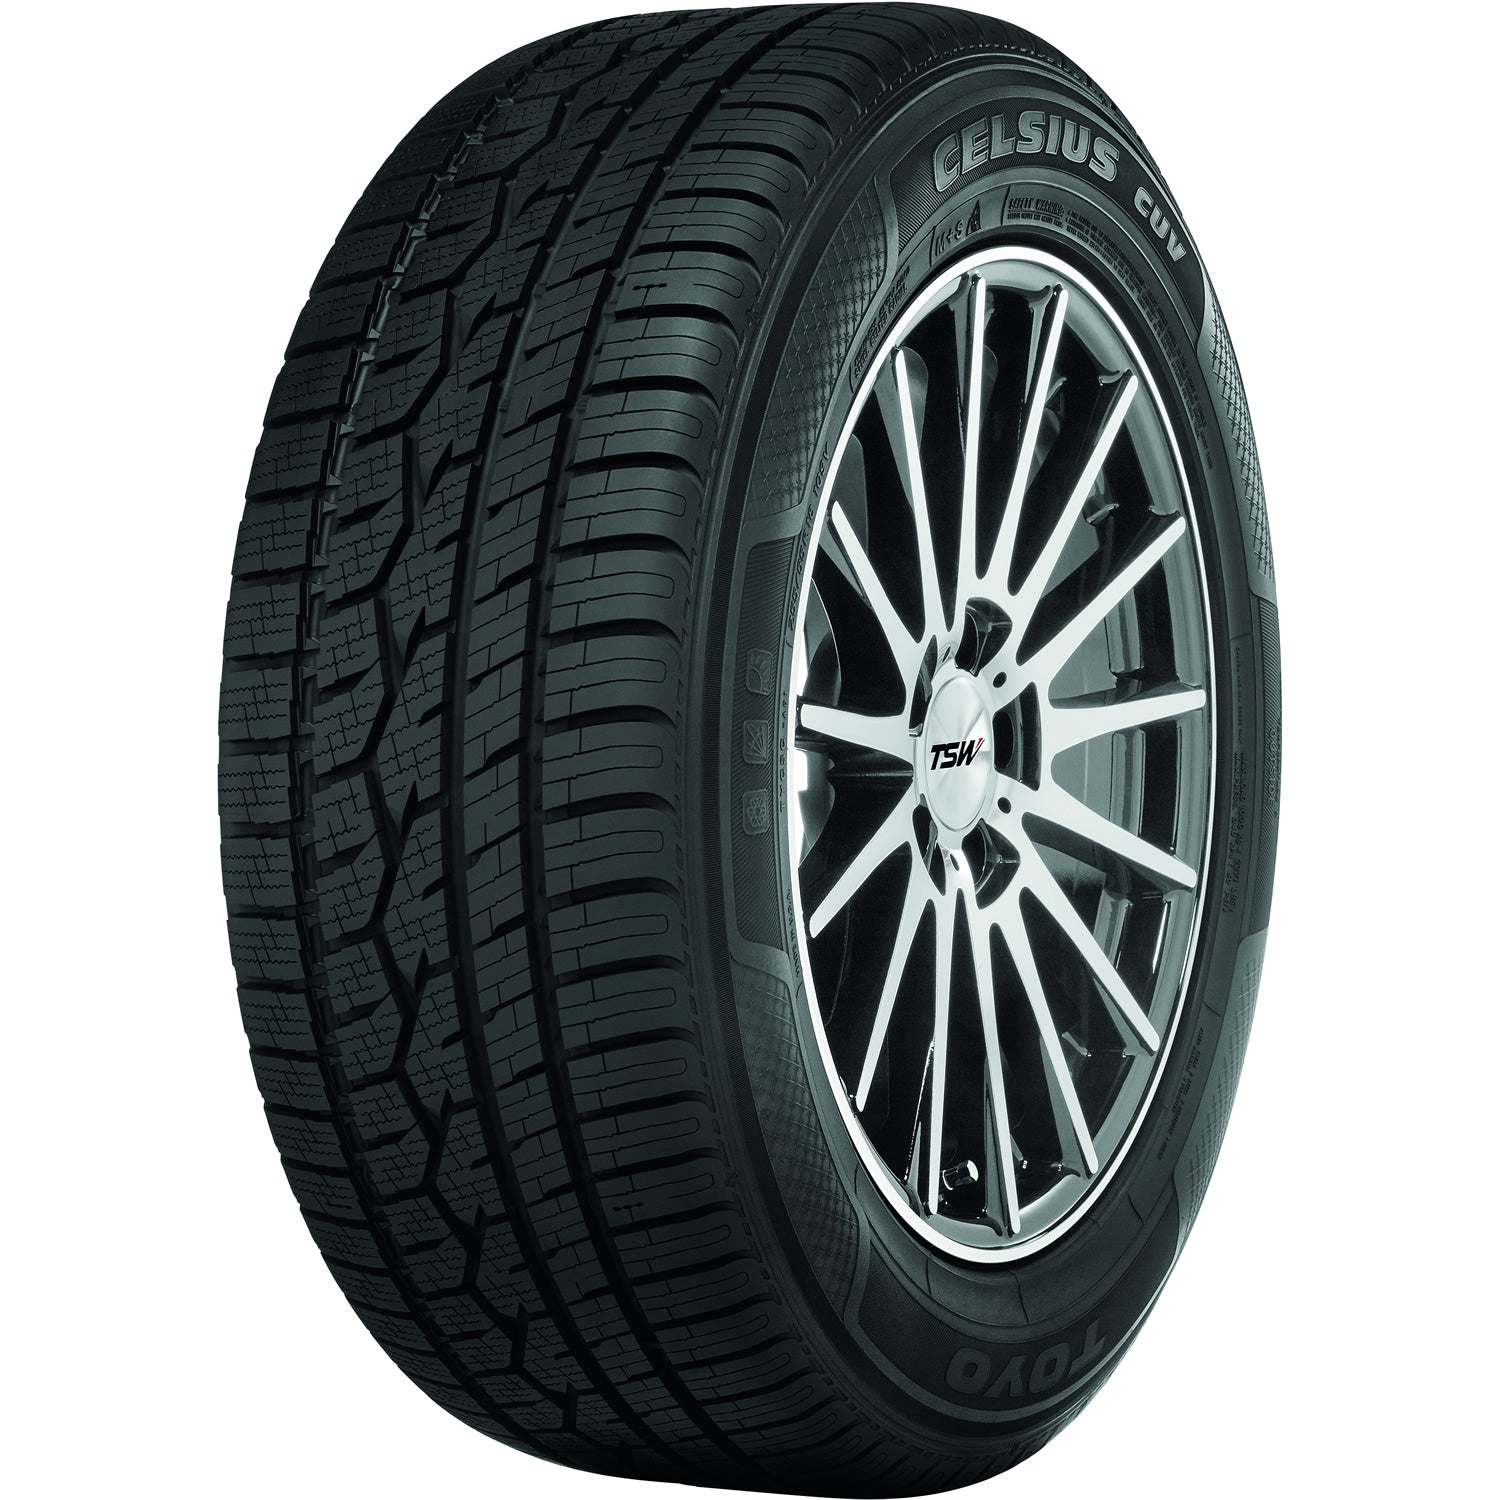 TOYO TIRES CELSIUS CUV 235/60R17 (28.1X9.4R 17) Tires